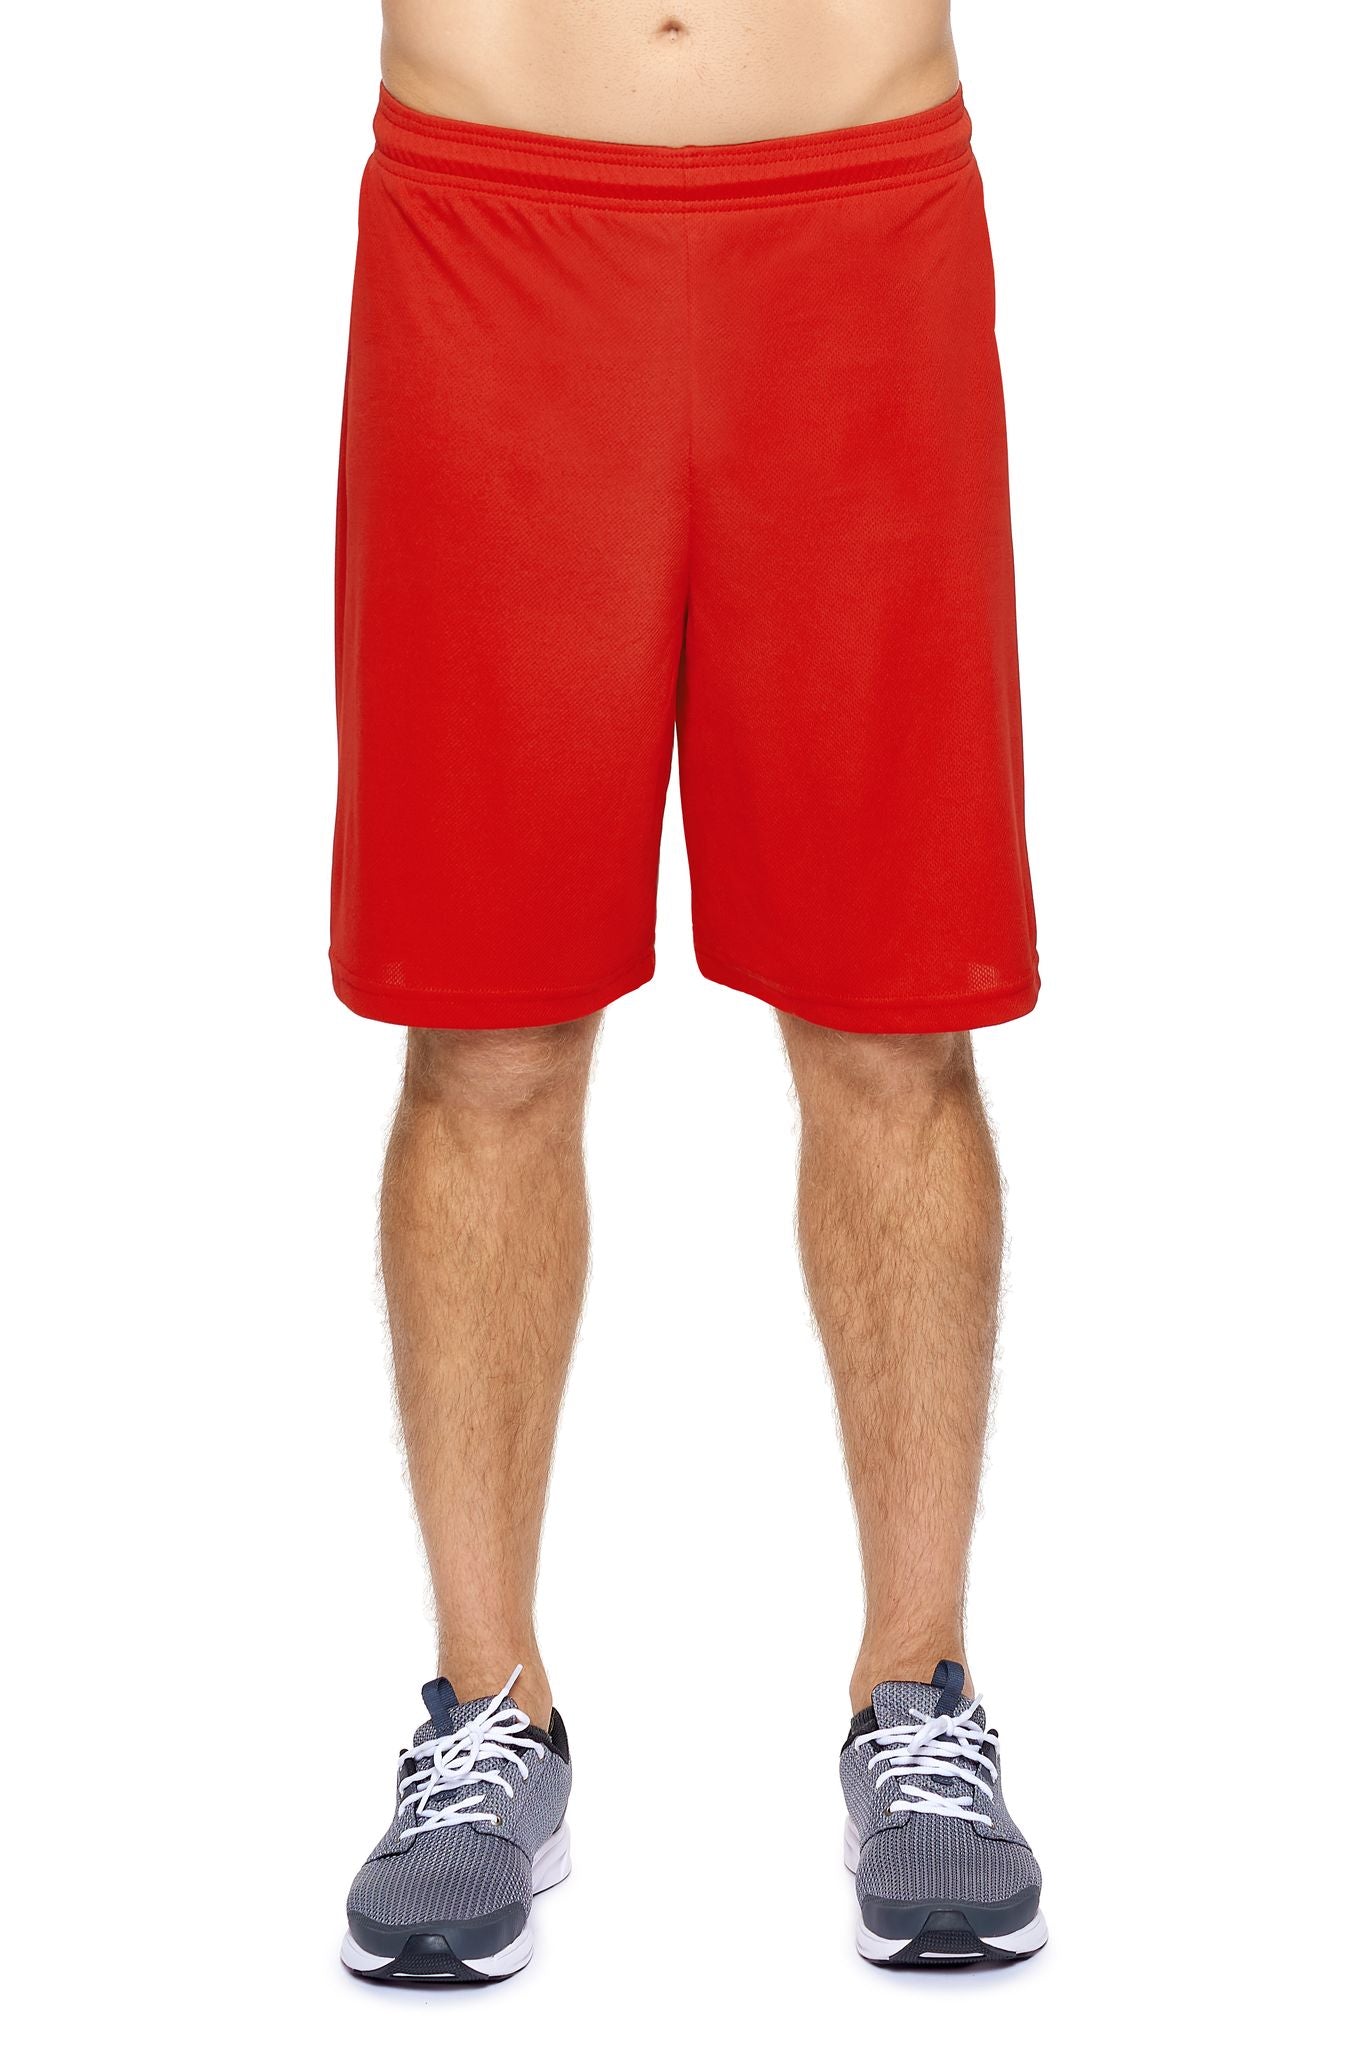 AJ1089🇺🇸 Oxymesh™ Training Shorts - Expert Brand #true-red